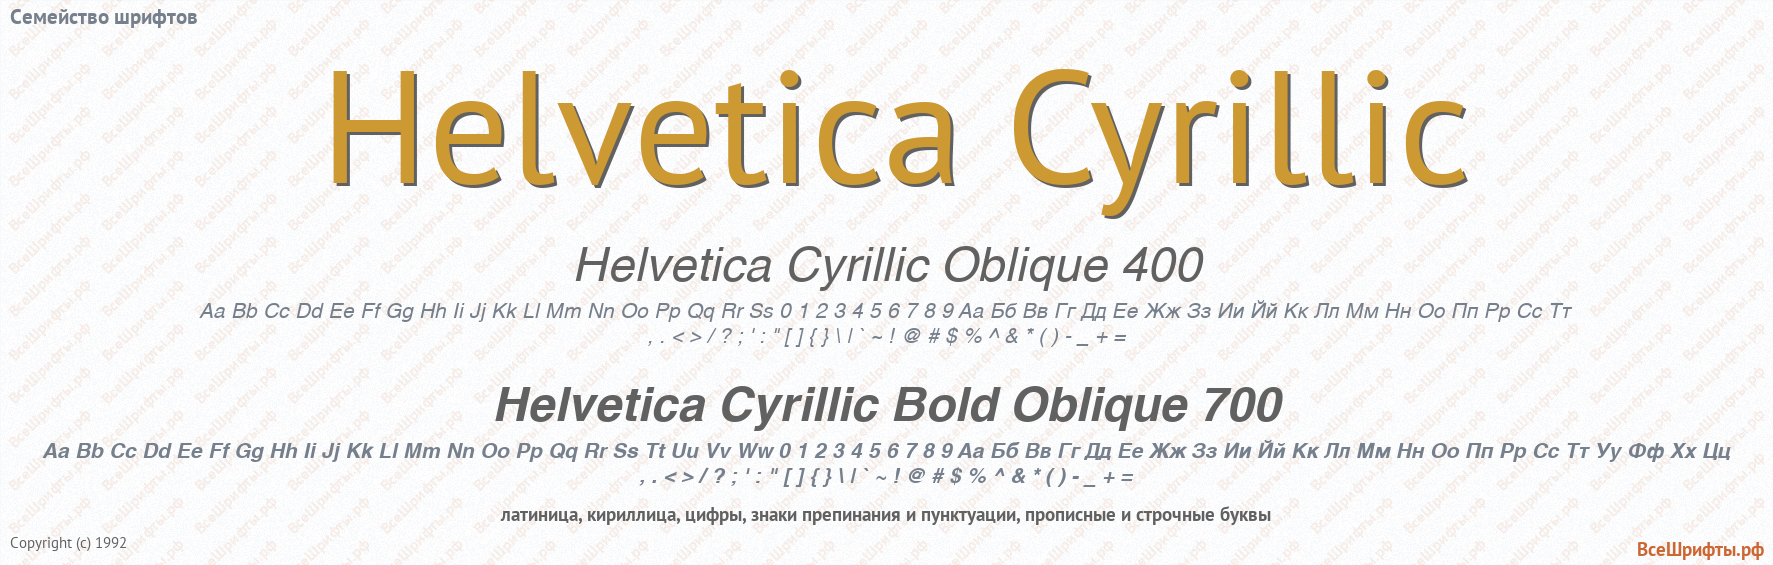 Helvetica Cyrillic. Helvetica кириллица. Helvetica шрифт русский. Семейства шрифтов кириллица.